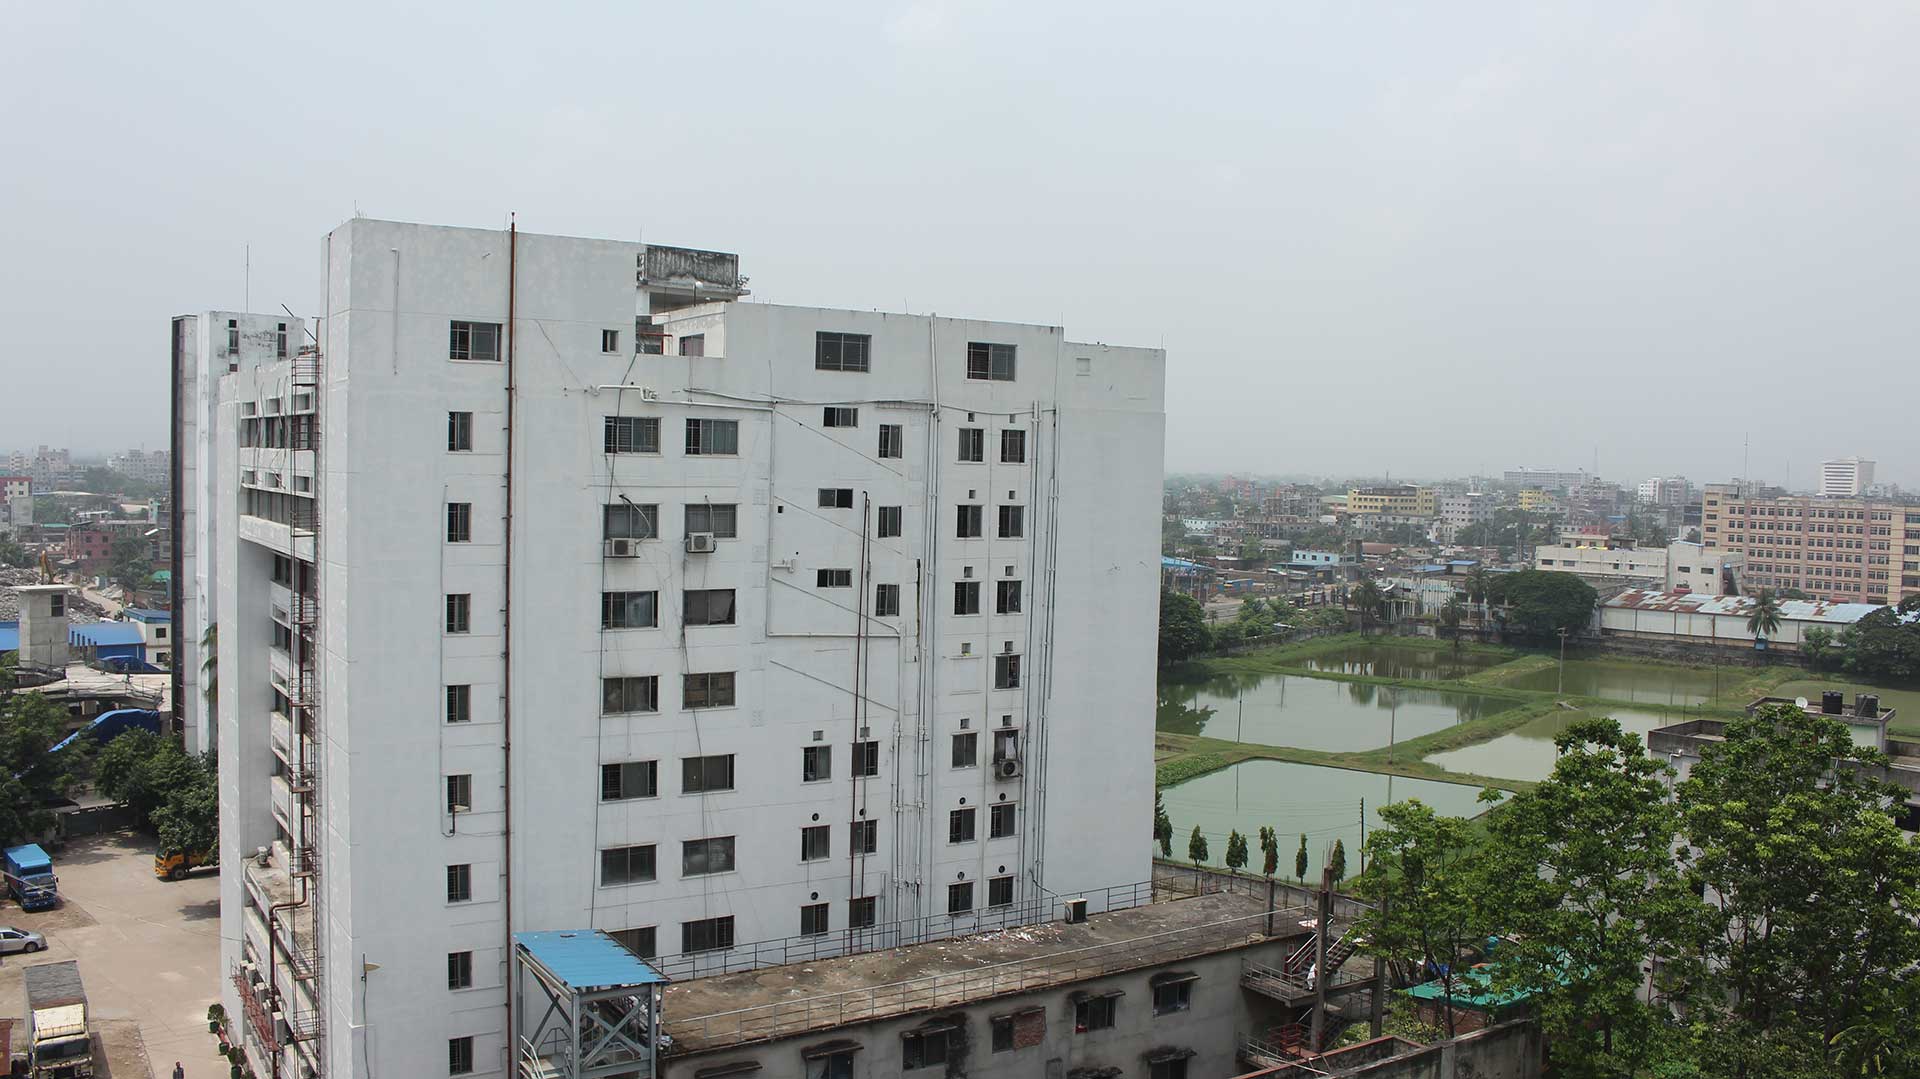 Rupa Knitwear (Pvt) Limited রুপা নীটওয়্যার (প্রাঃ) লিমিটেড Map -  Industrial building - Gachha, Dhaka Division, Bangladesh